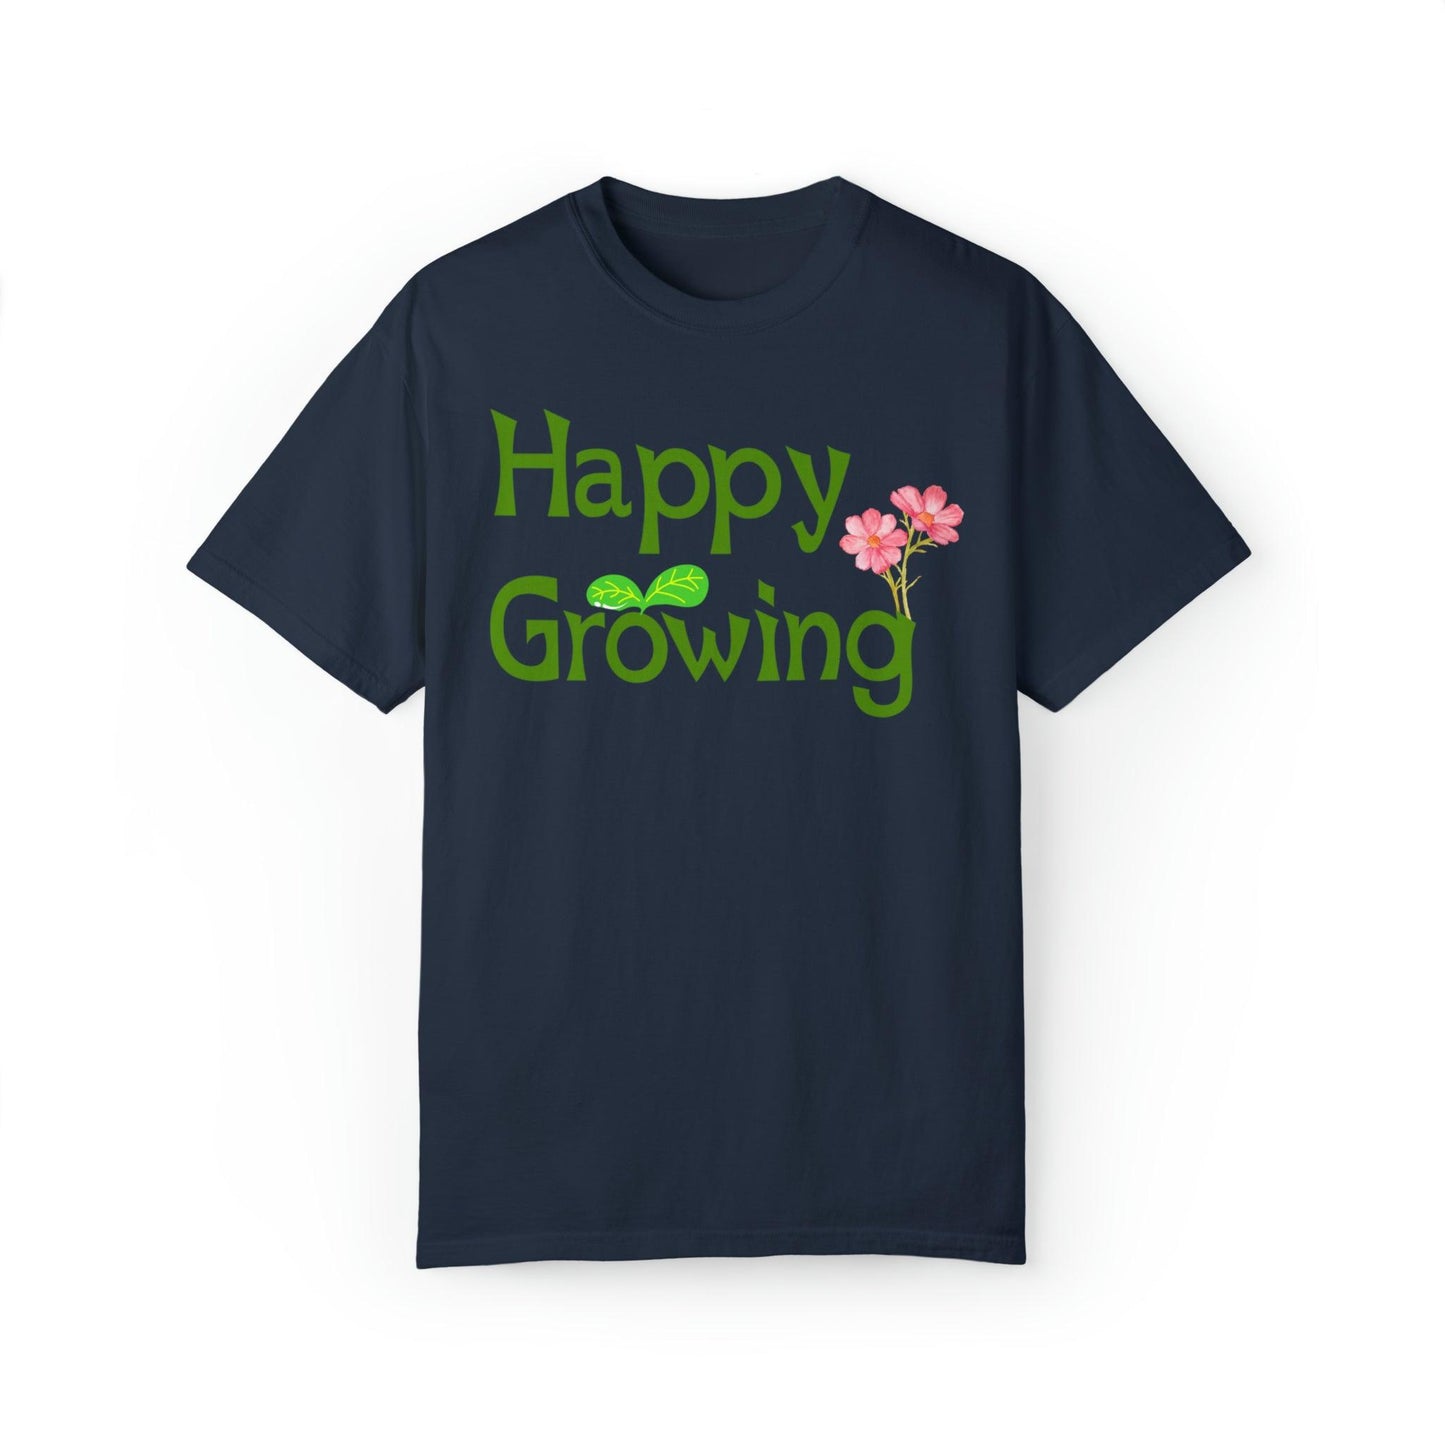 Shirt for farmers, Farmers shirt, Shirt for gardeners, Shirt for farm lover, Gardening t-shirt, Flower lover shirt, Farm family tee, Farm girl shirt